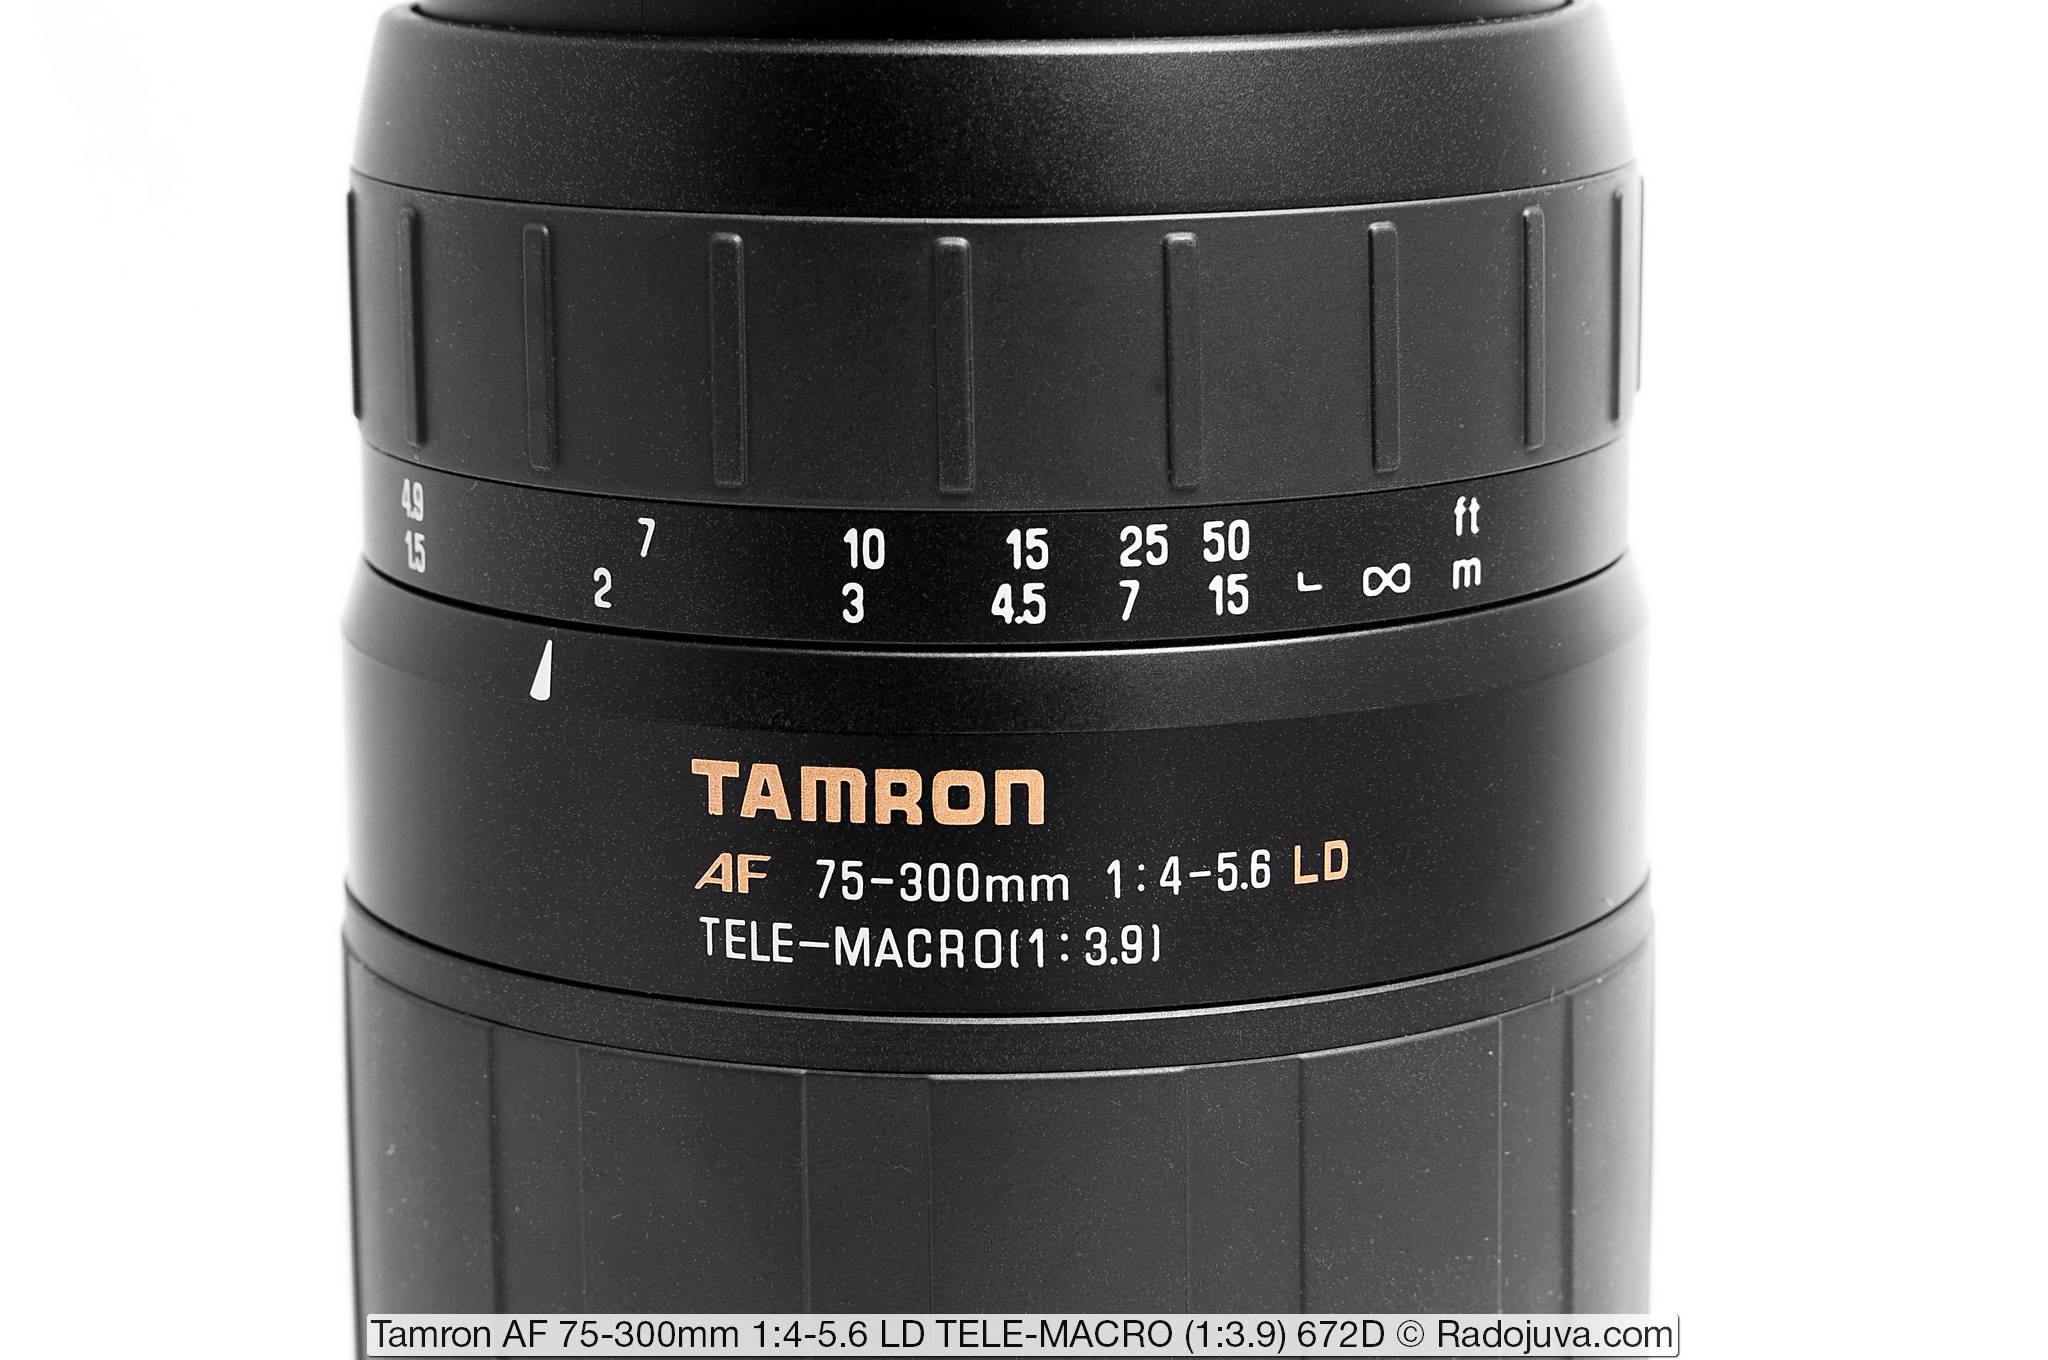 Tamron AF 75-300mm 1:4-5.6 LD TELE-MACRO (1:3.9) 672D